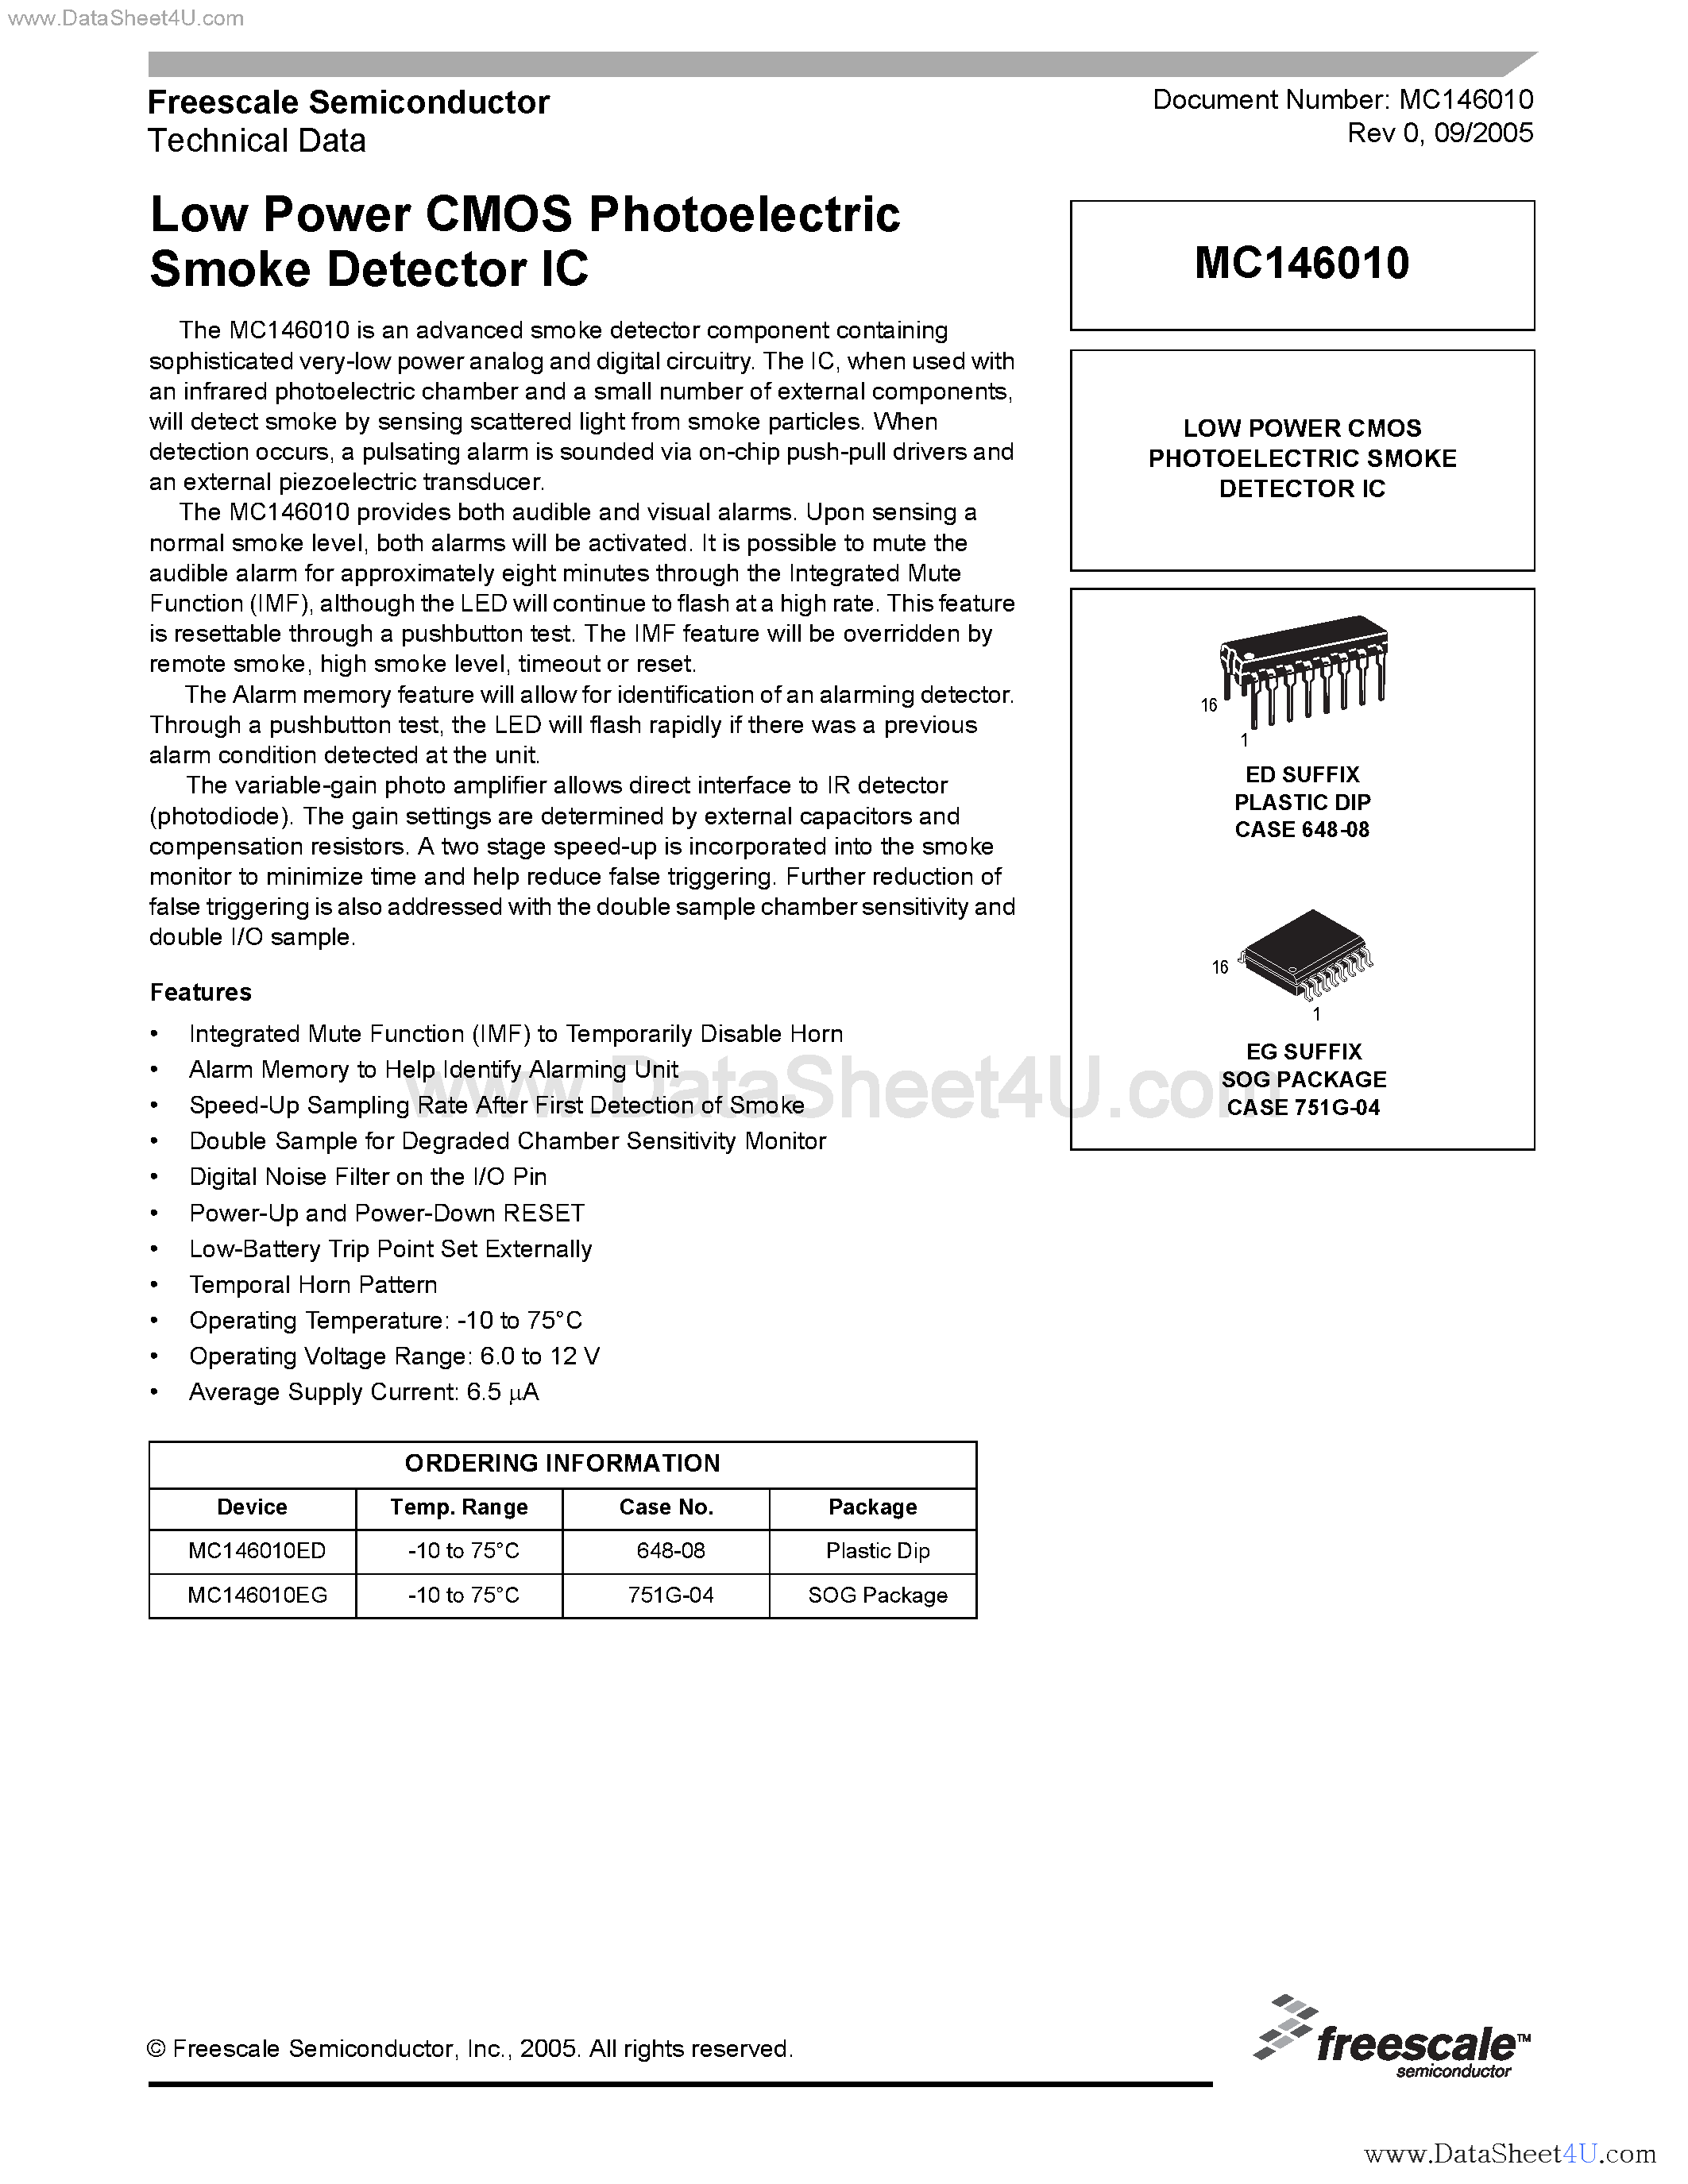 Datasheet MC146010 - Low Power CMOS Photoelectric Smoke Detector IC page 1